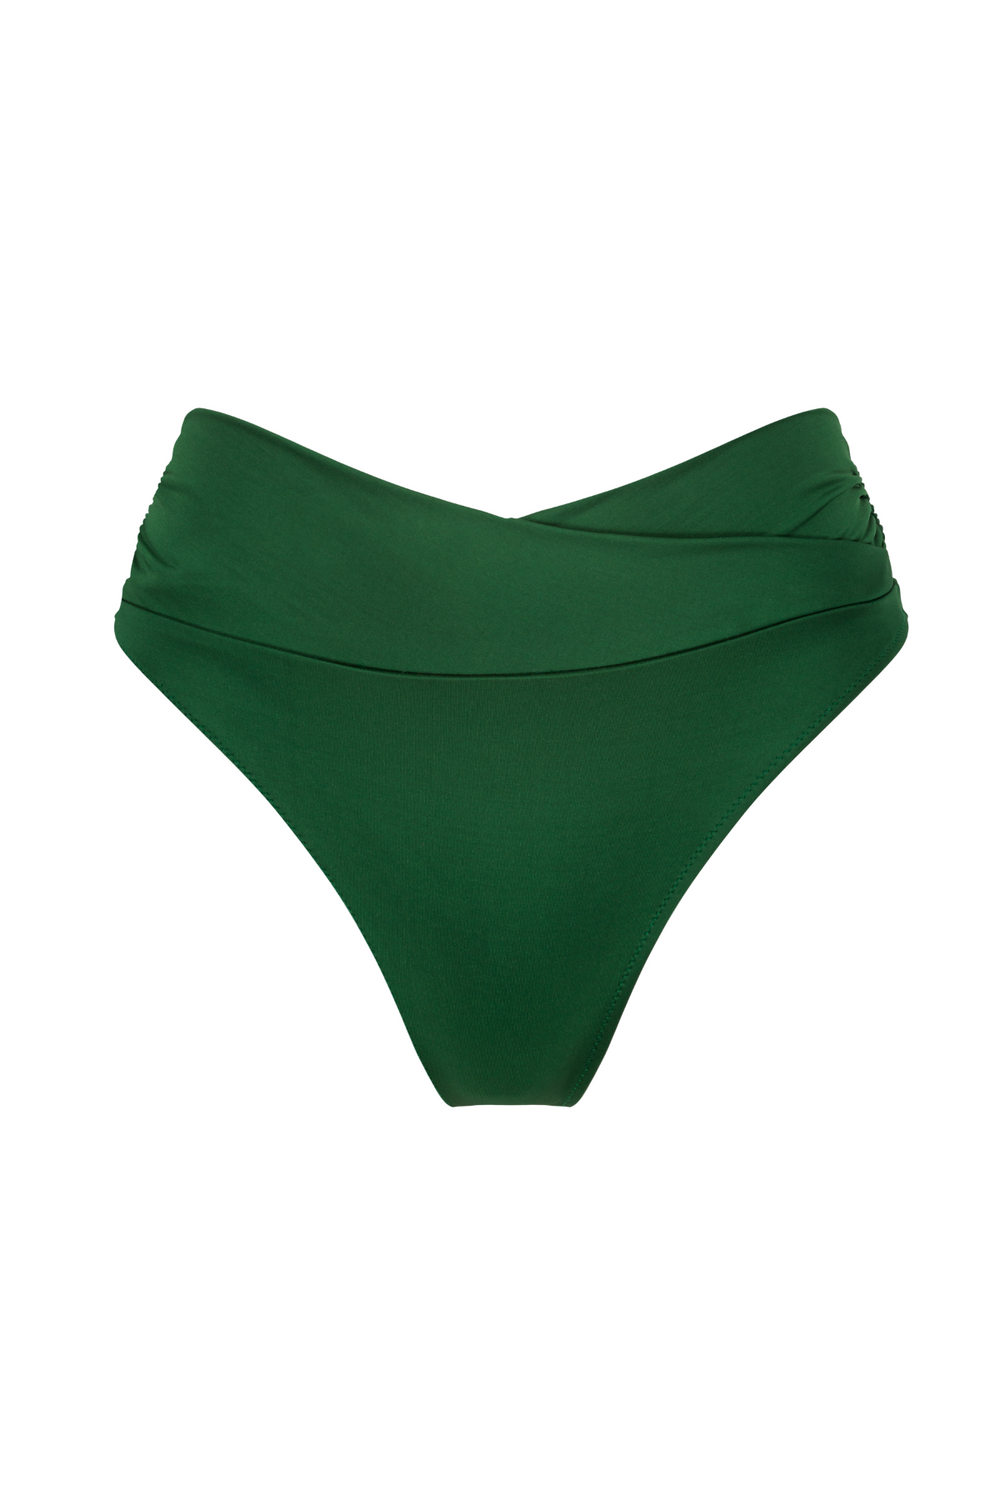 Myrto High Waisted Panty - Emerald Green